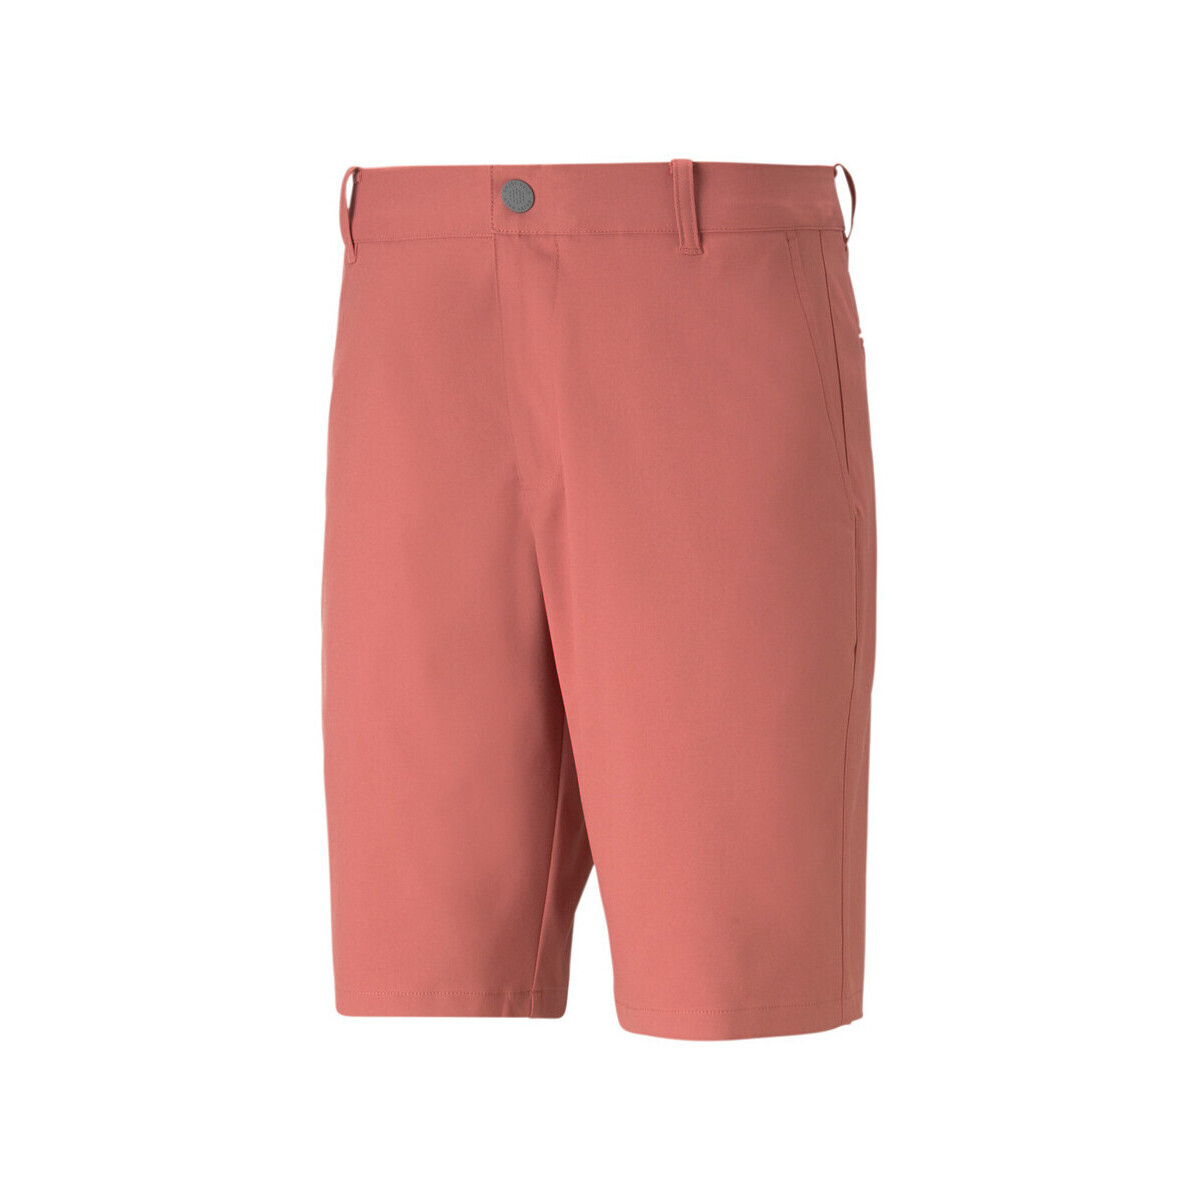 Abbigliamento Uomo Shorts / Bermuda Puma 535522-18 Rosso